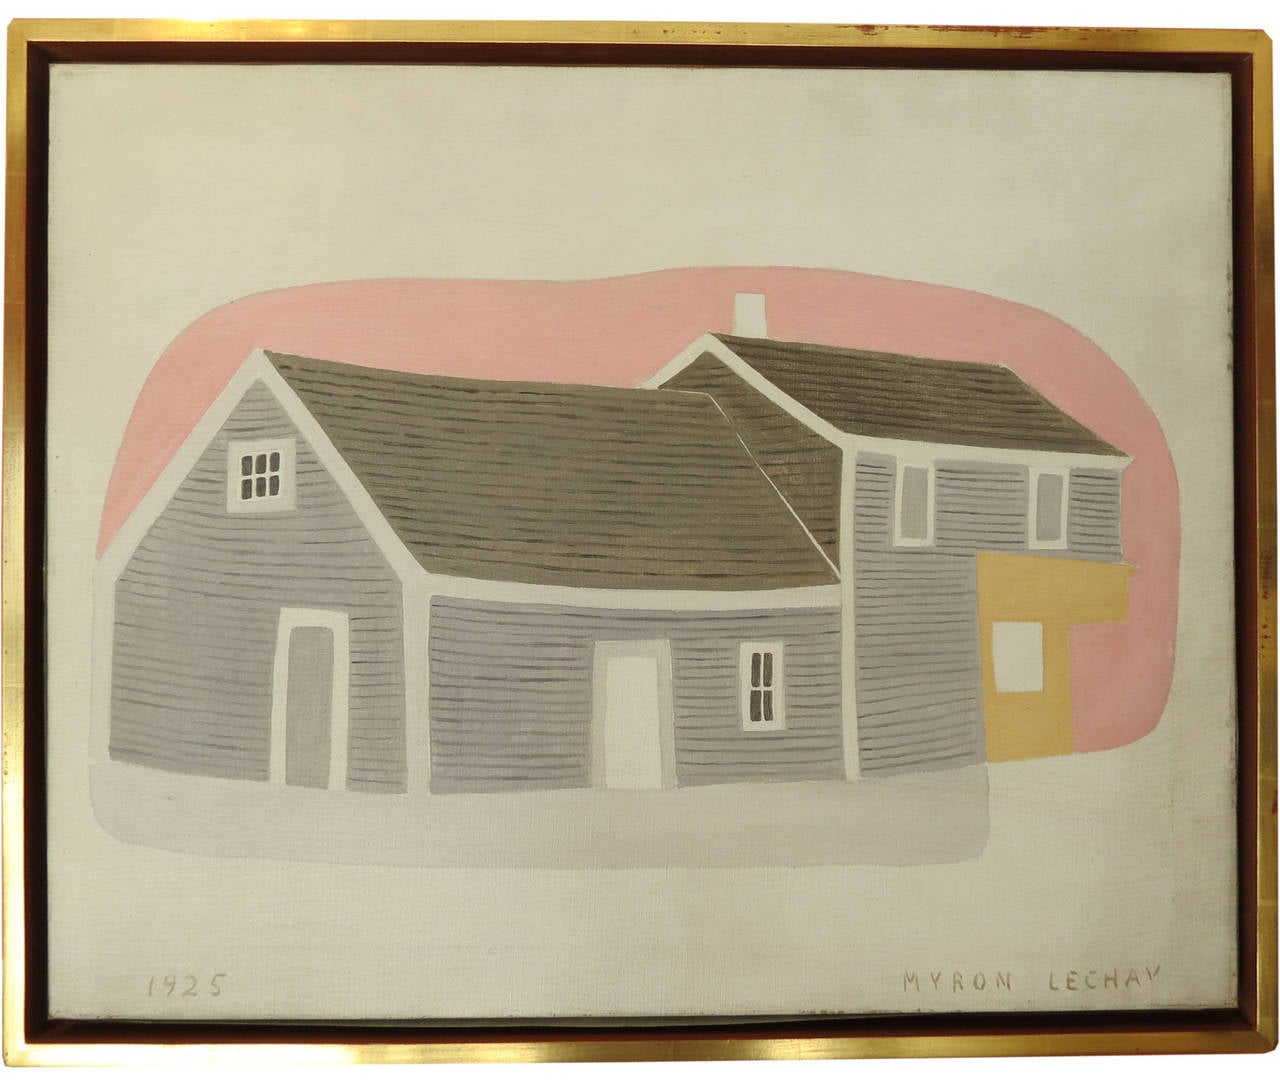 "Massachusetts House and Barn"